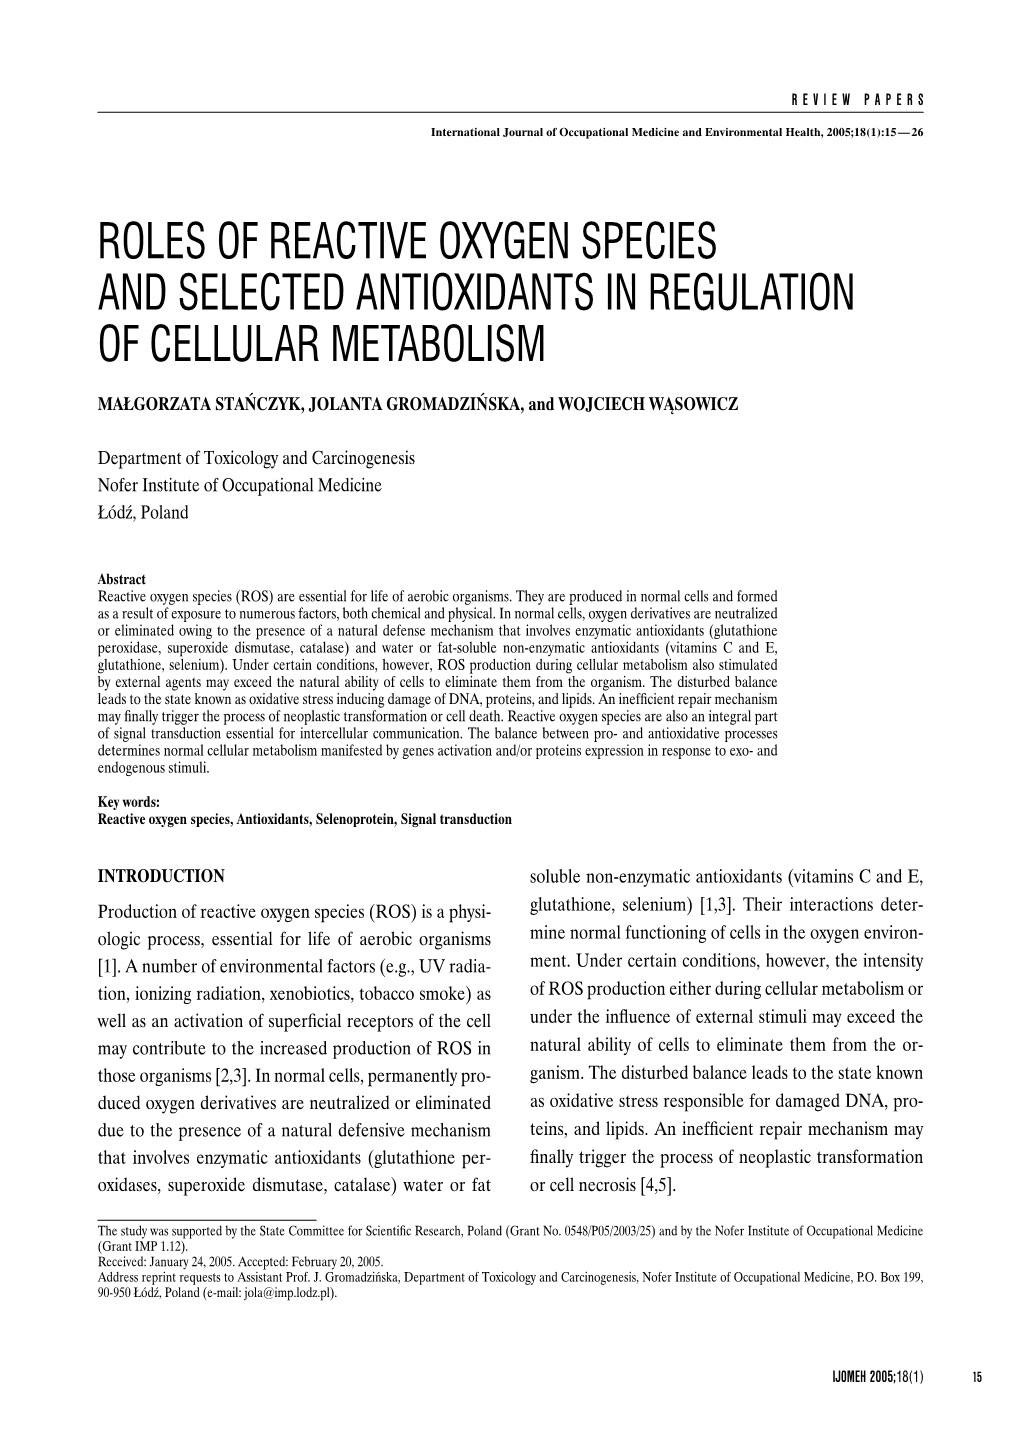 Roles of Reactive Oxygen Species and Selected Antioxidants in Regulation of Cellular Metabolism